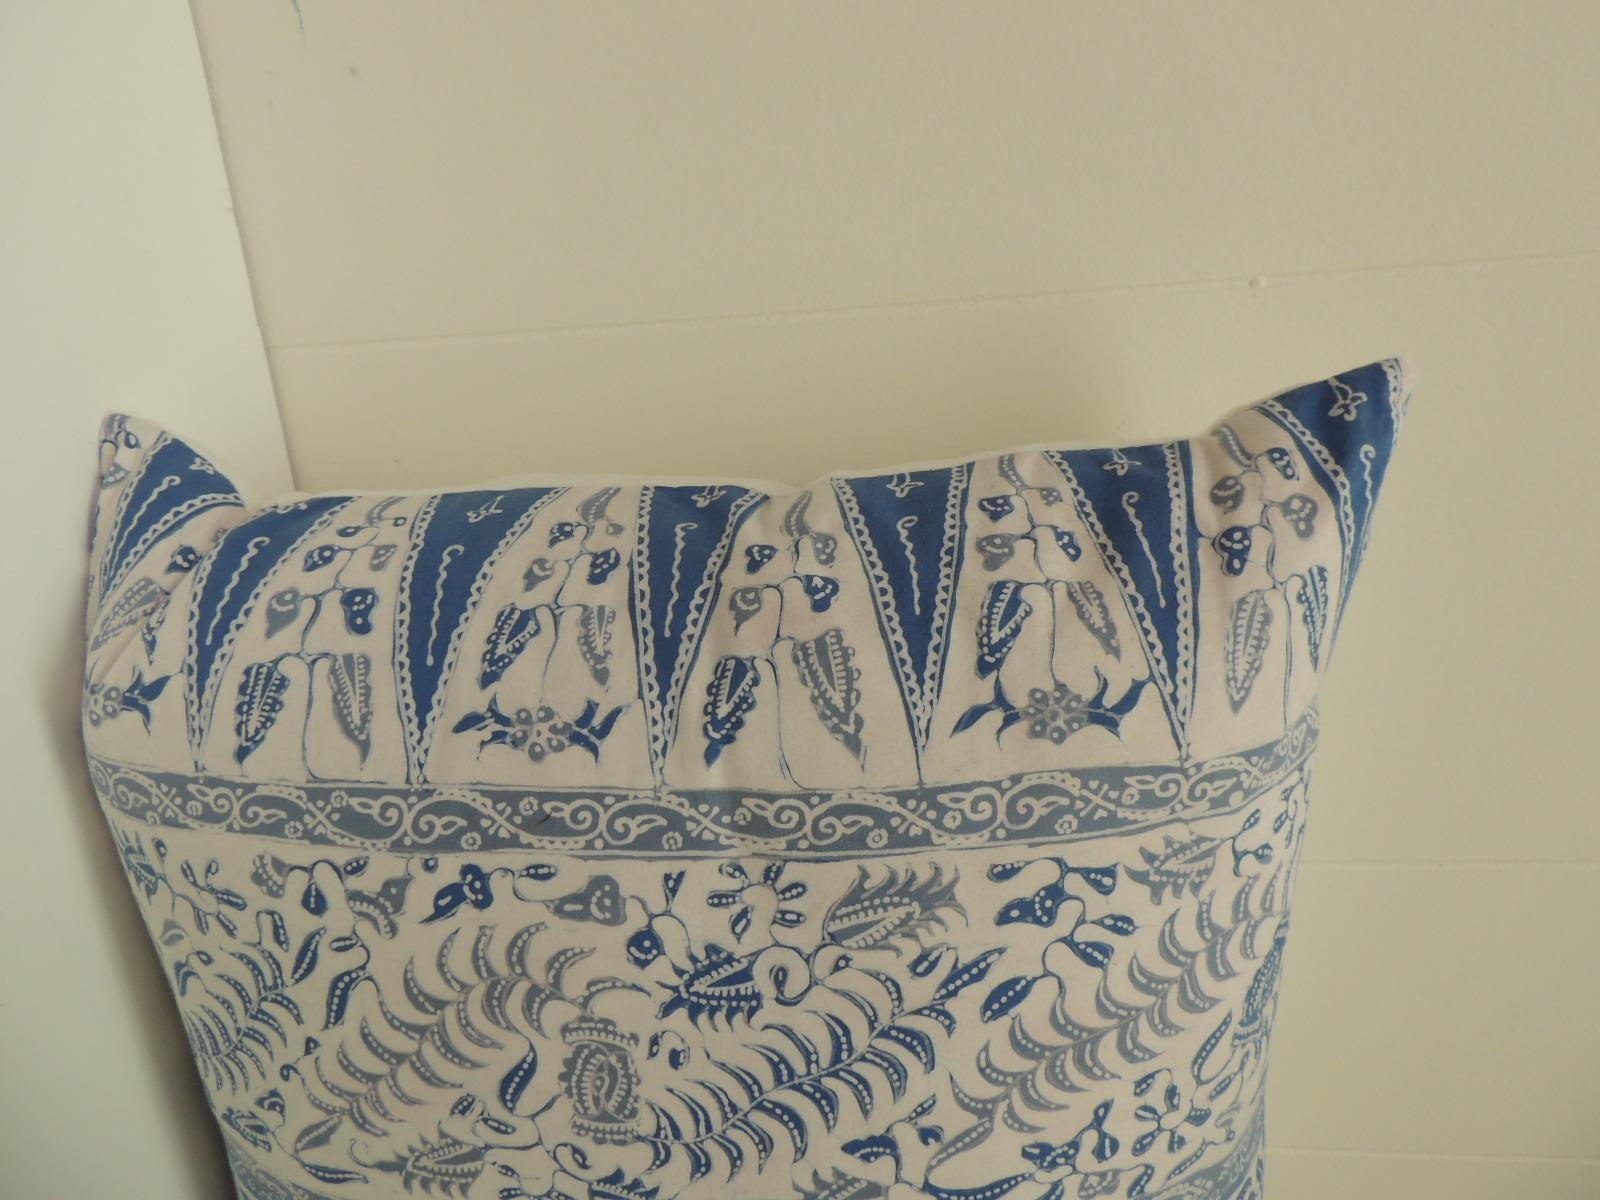 Vintage batik blue and white square decorative pillow.
Blue and white vintage batik textile handcrafted square throw pillows. Decorative square batik textile pillows finished with white linen backing, throw pillows handcrafted and designed in the